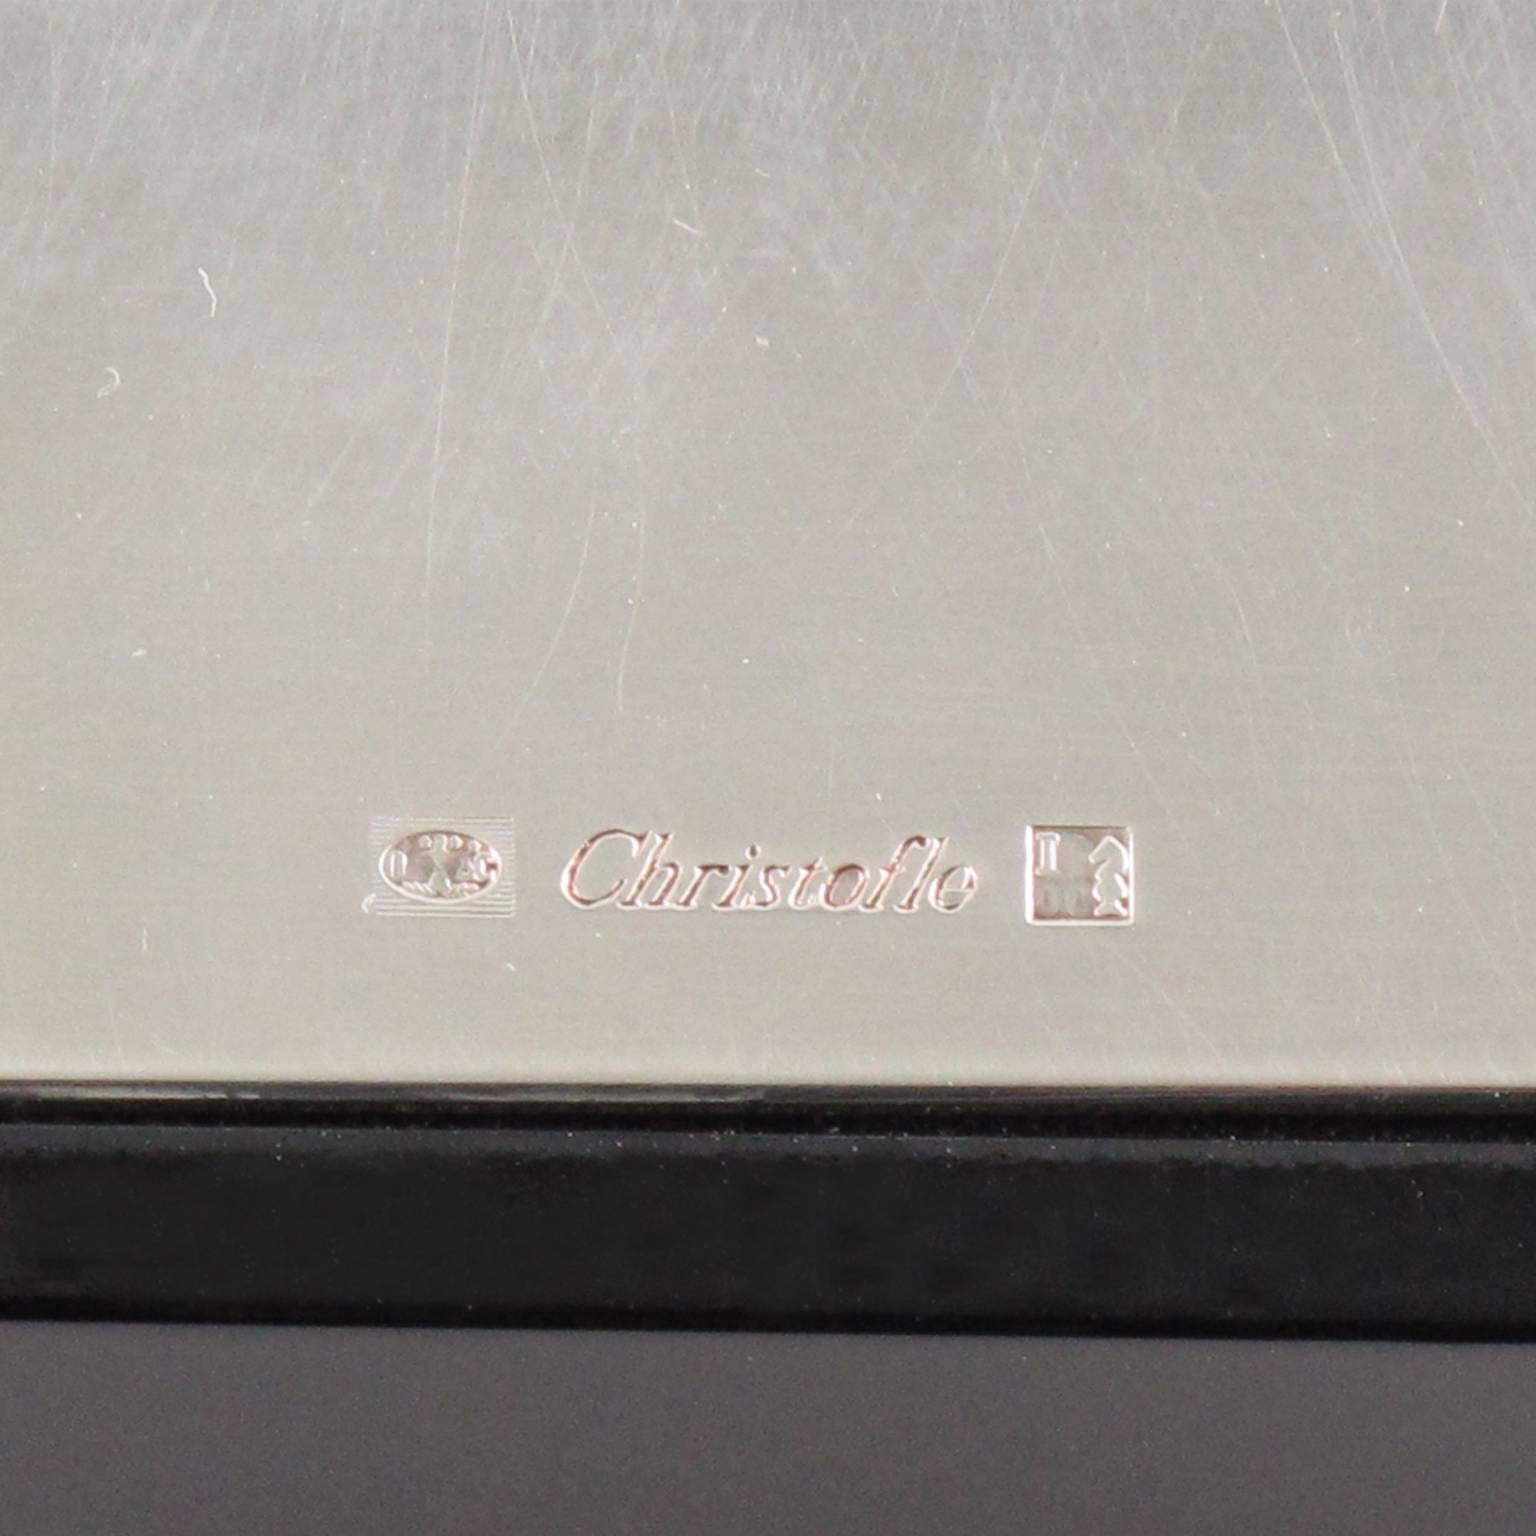 Late 20th Century Silver Plate and Lacquer Vertigo Box Designed by Andrée Putman for Christofle